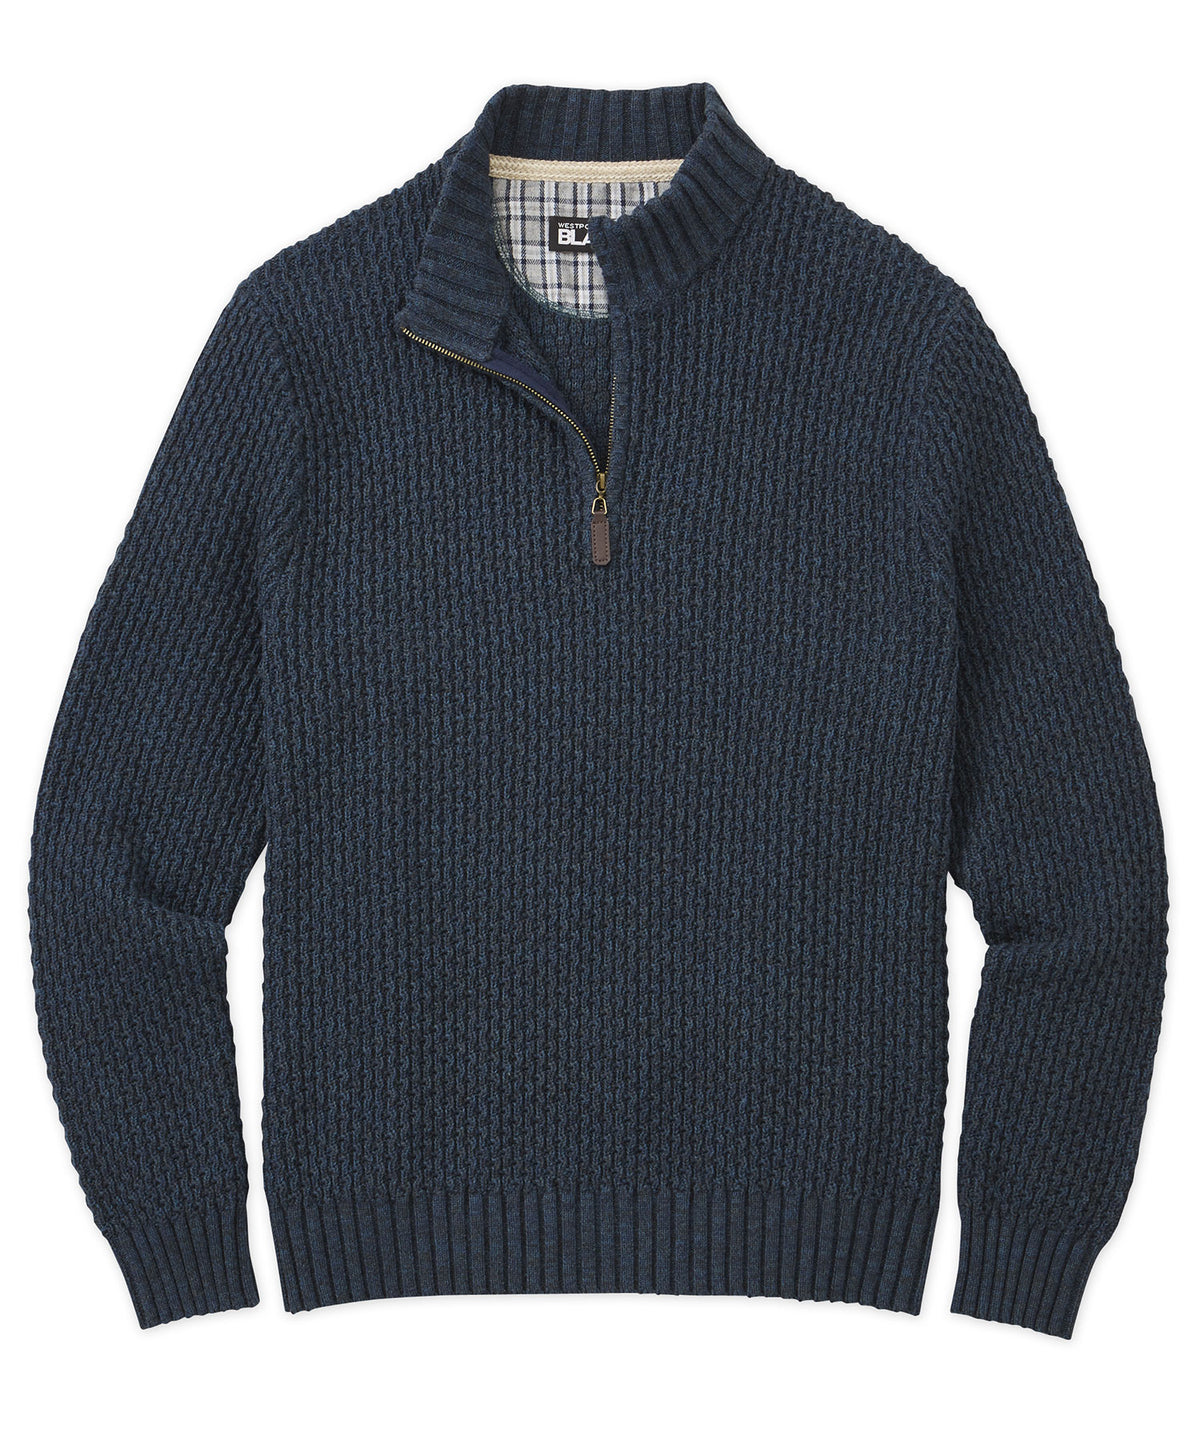 Westport Black Tri Color Quarter-Zip Sweater, Big & Tall